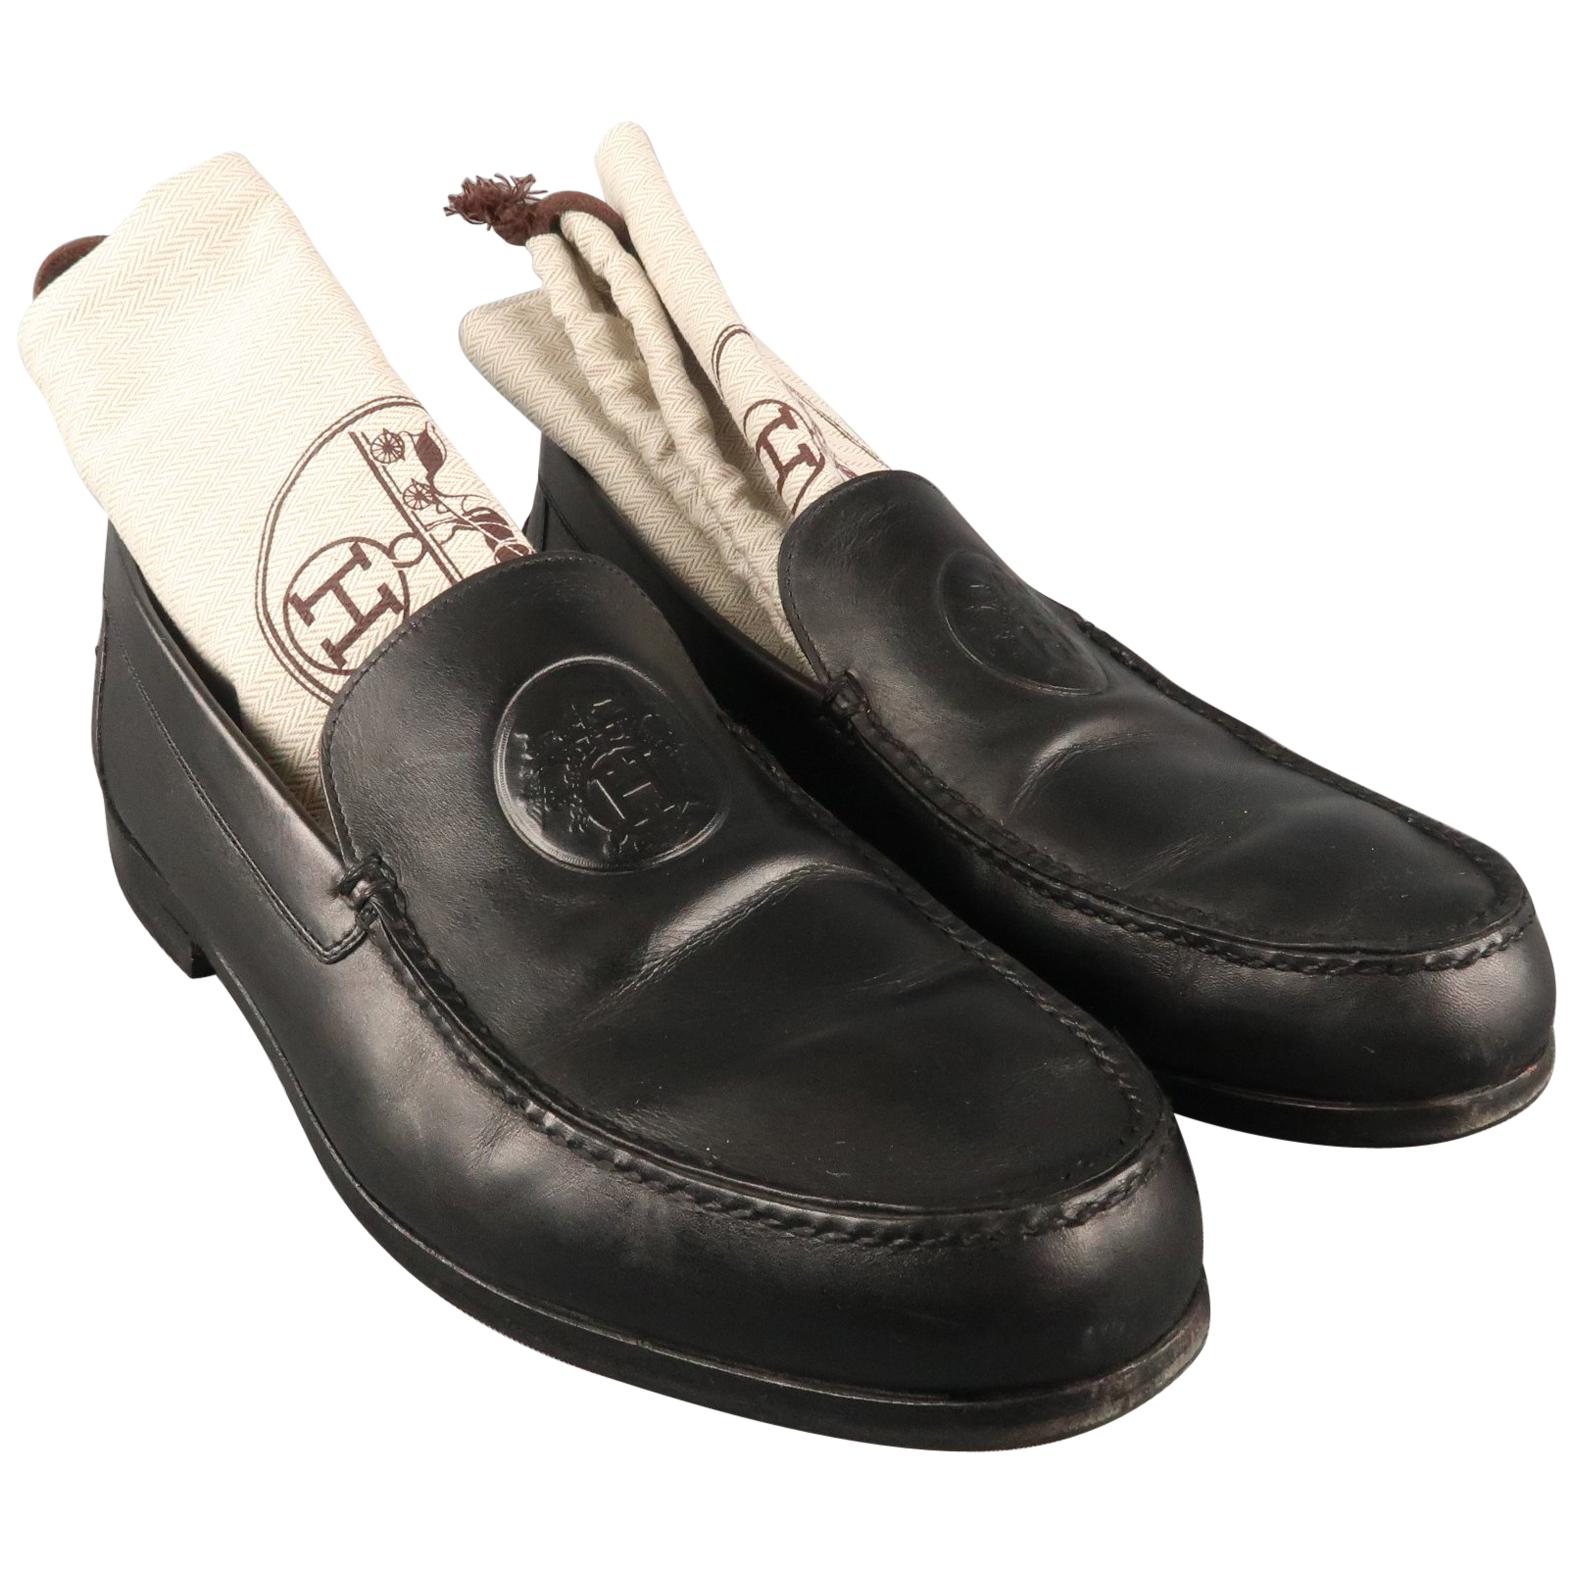 Men's HERMES Size 9.5 Black Leather Embossed Logo Slip On Loafers